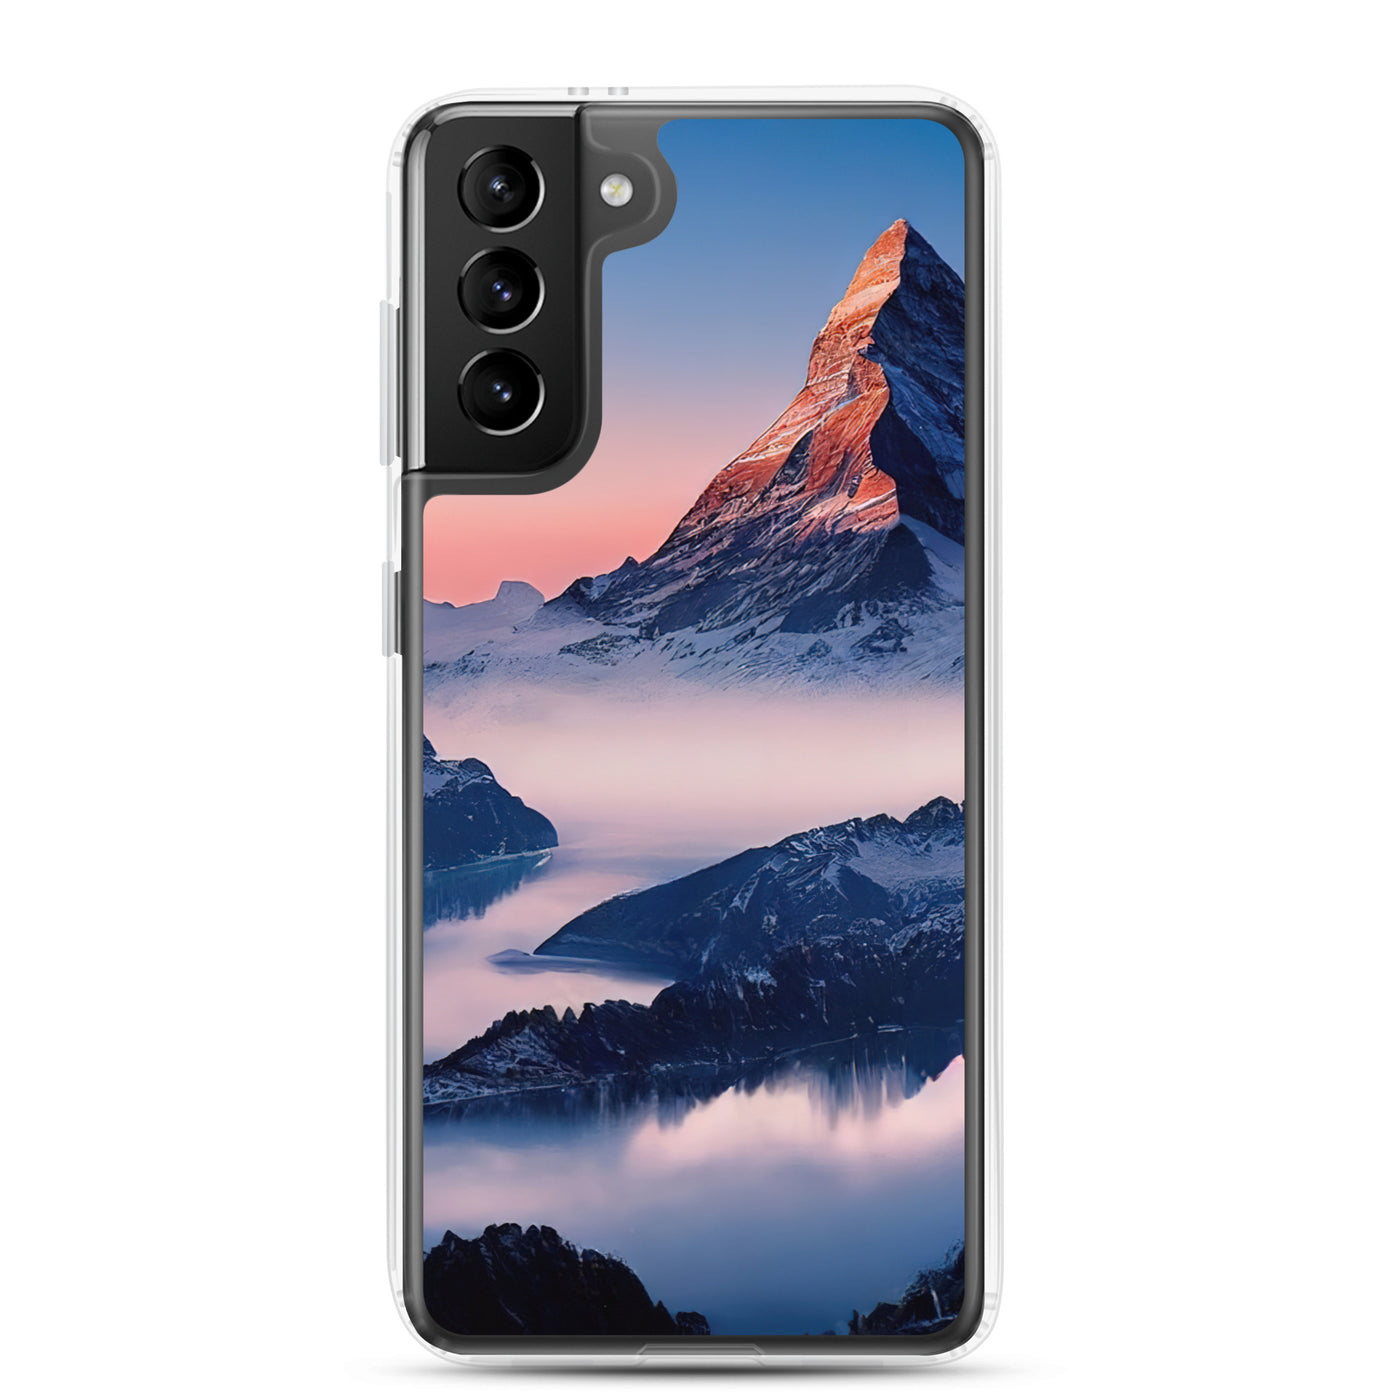 Matternhorn - Nebel - Berglandschaft - Malerei - Samsung Schutzhülle (durchsichtig) berge xxx Samsung Galaxy S21 Plus